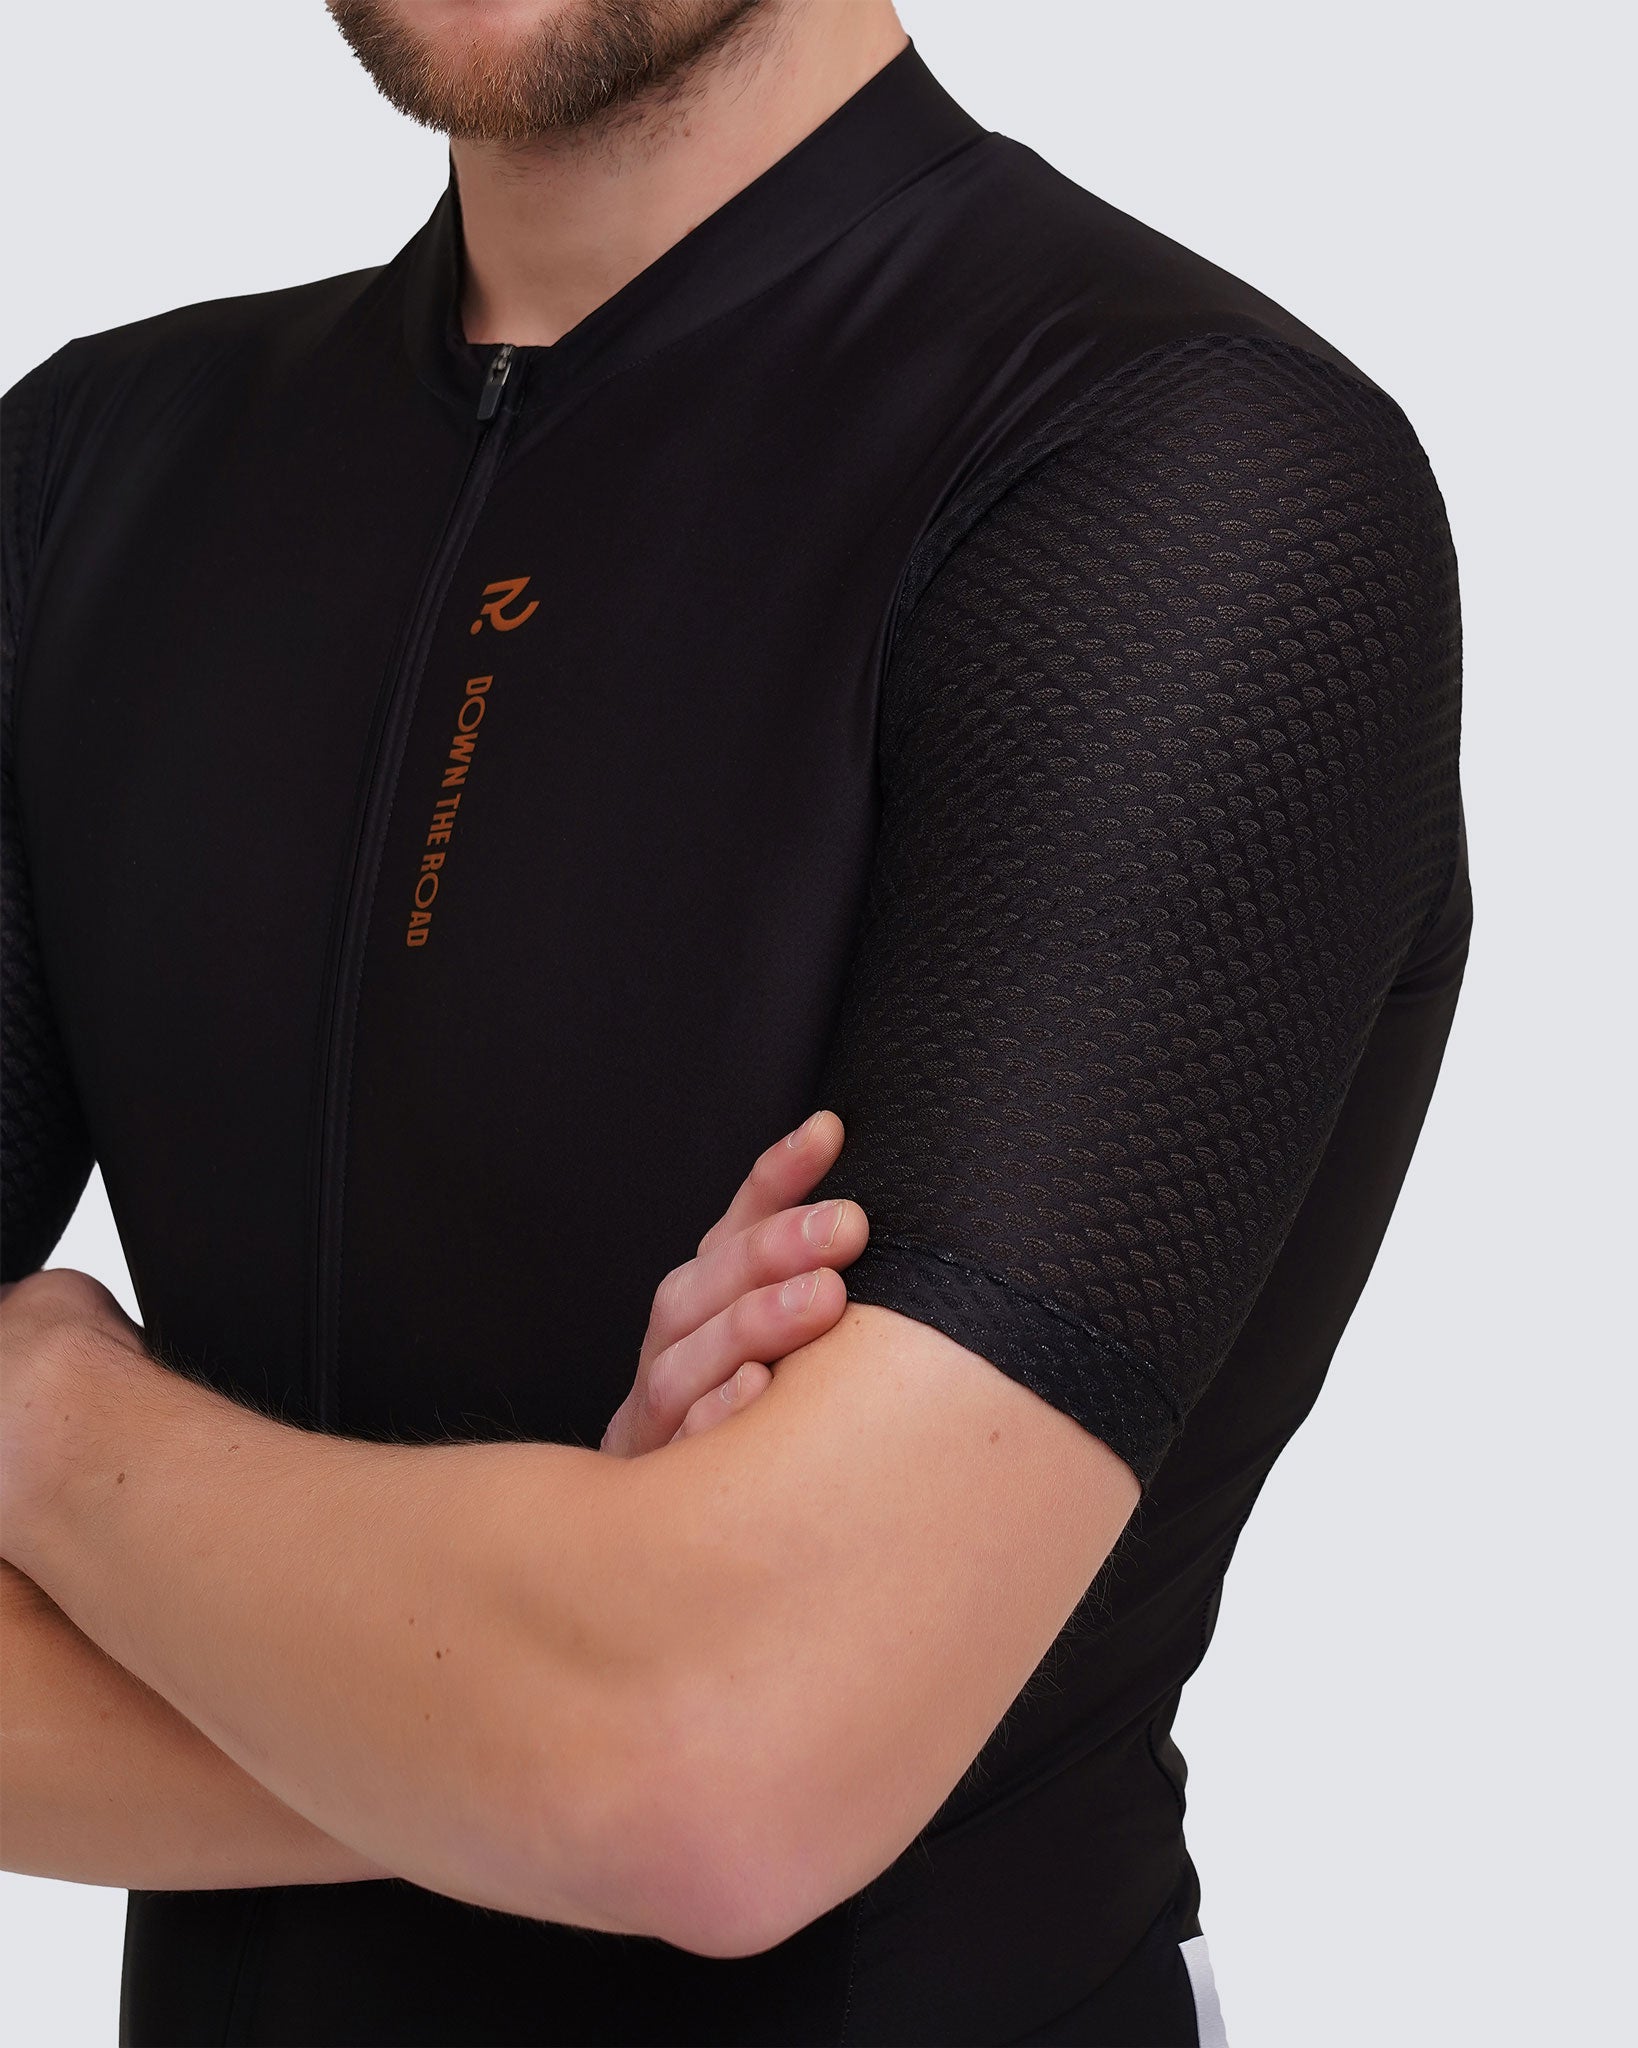 racing black men cycling jersey mesh sleeve close up